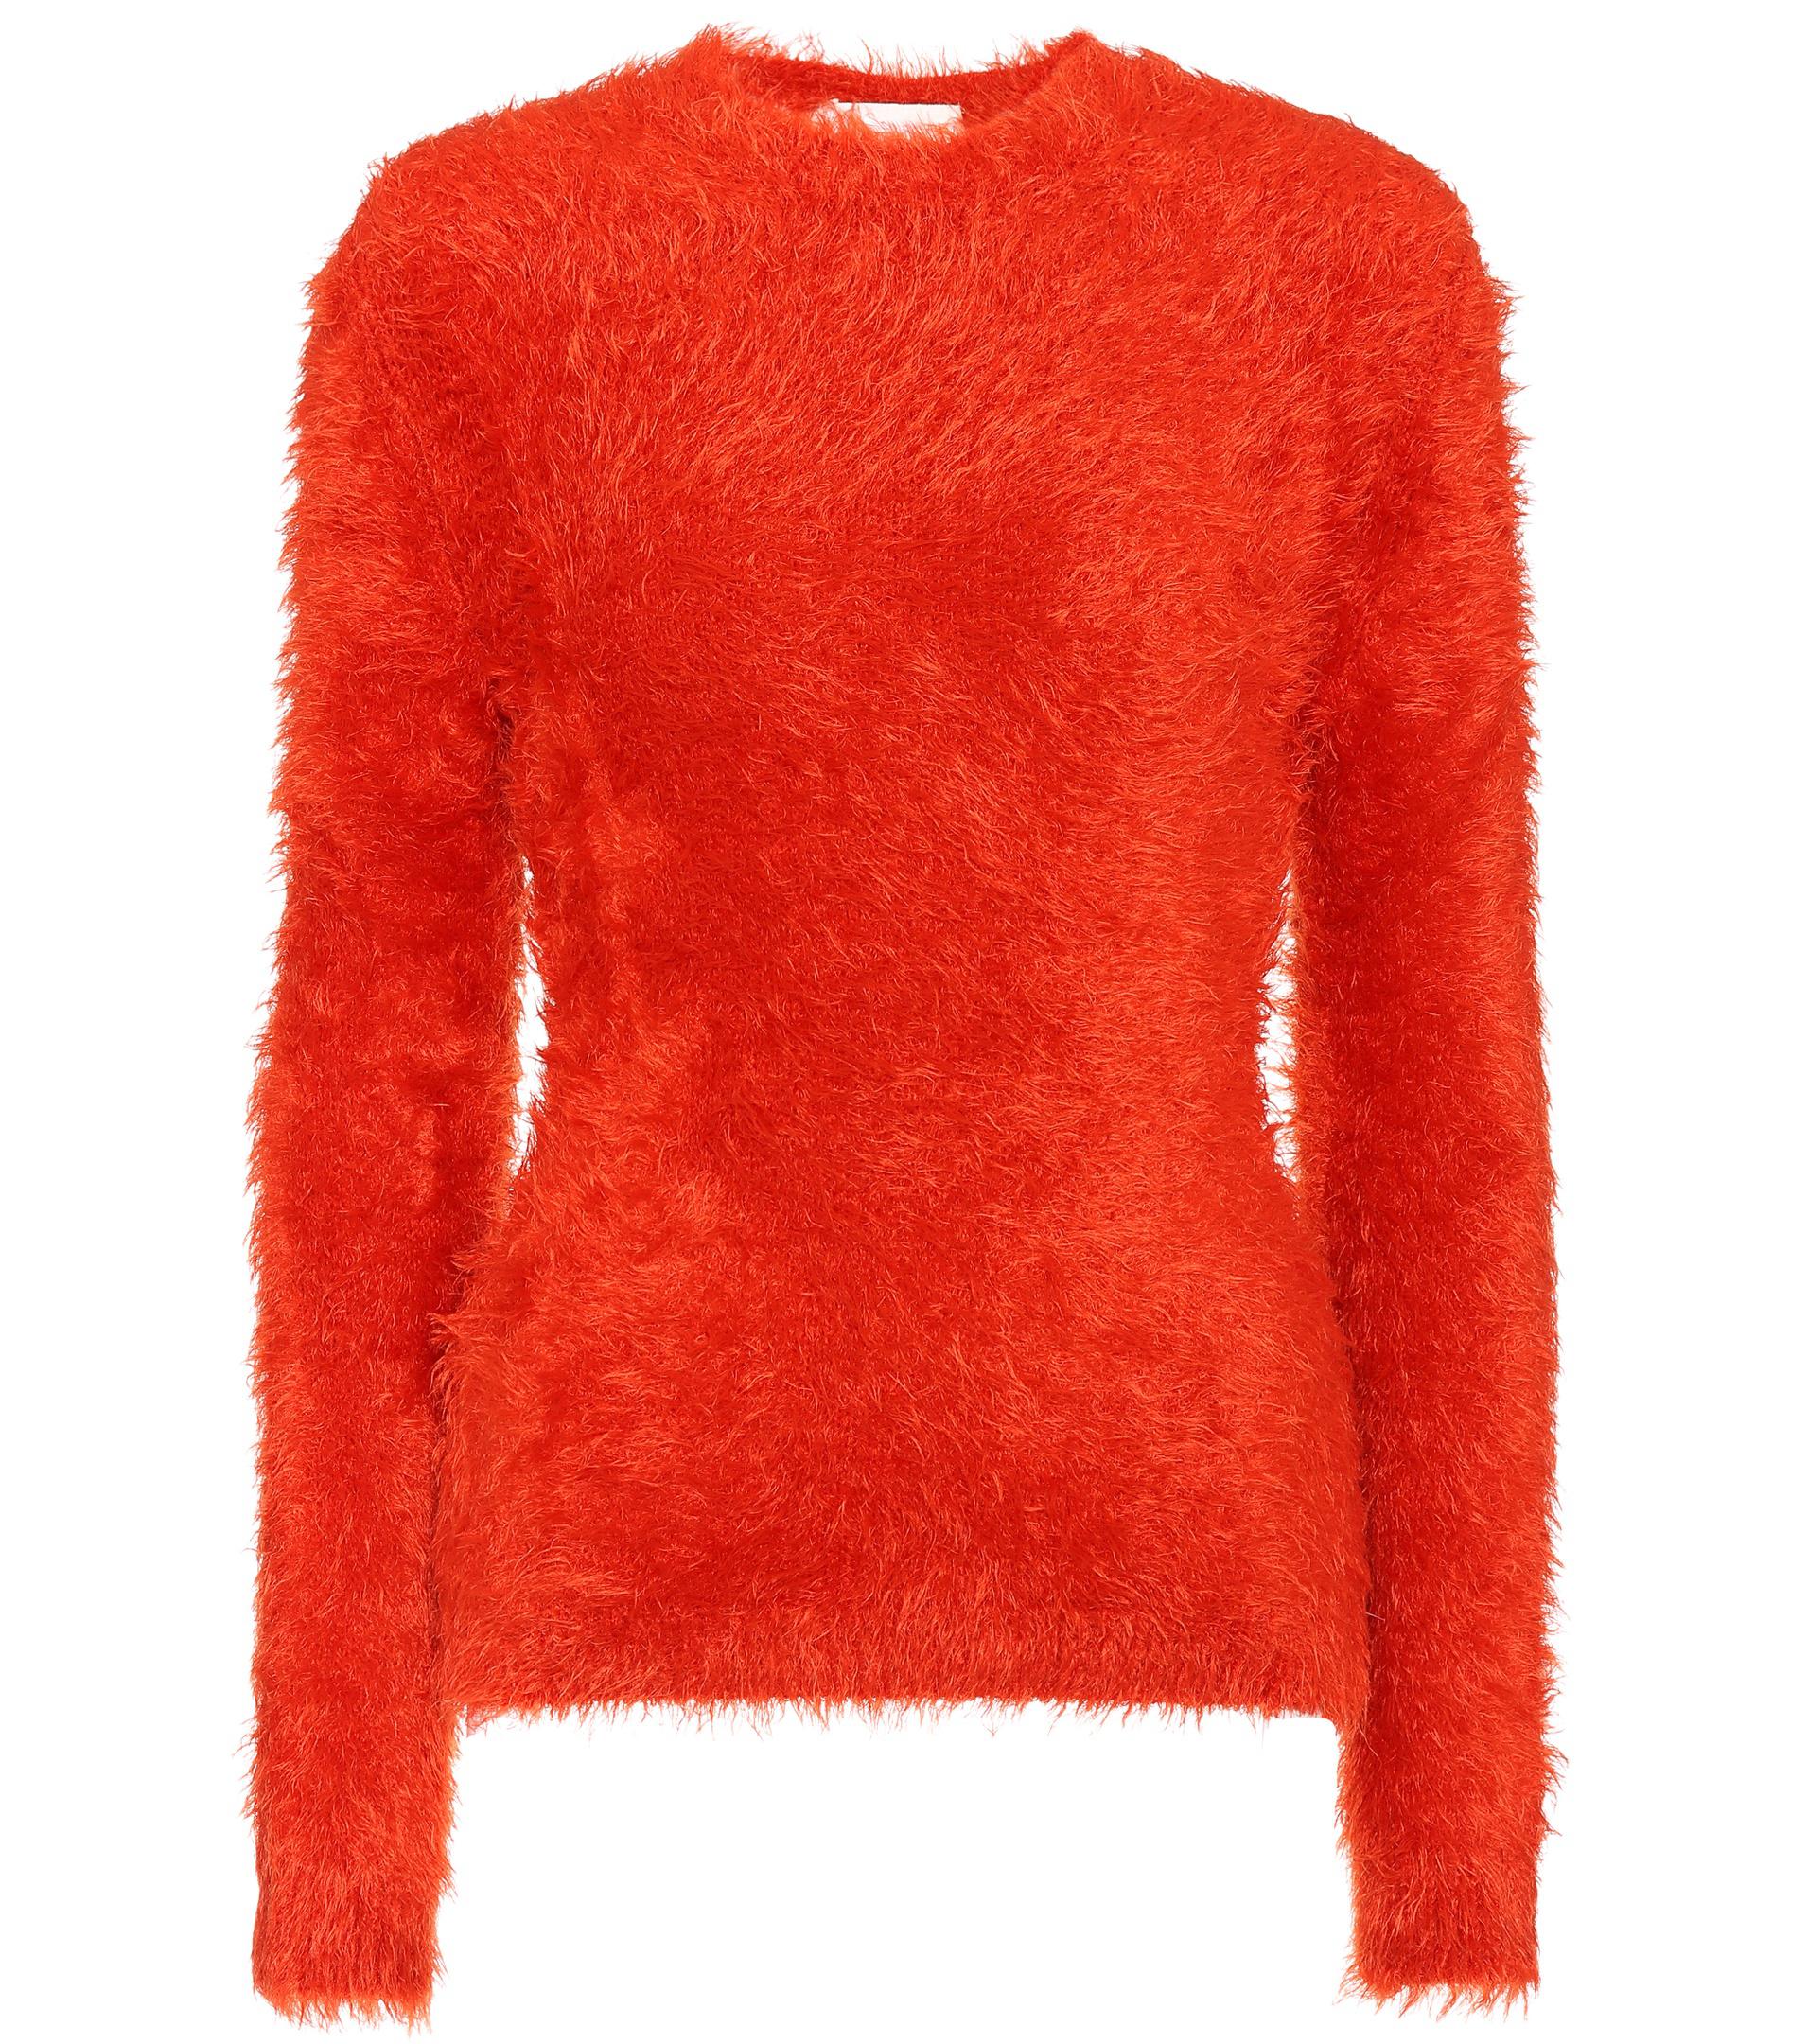 Marni Faux-fur Sweater in Orange - Lyst